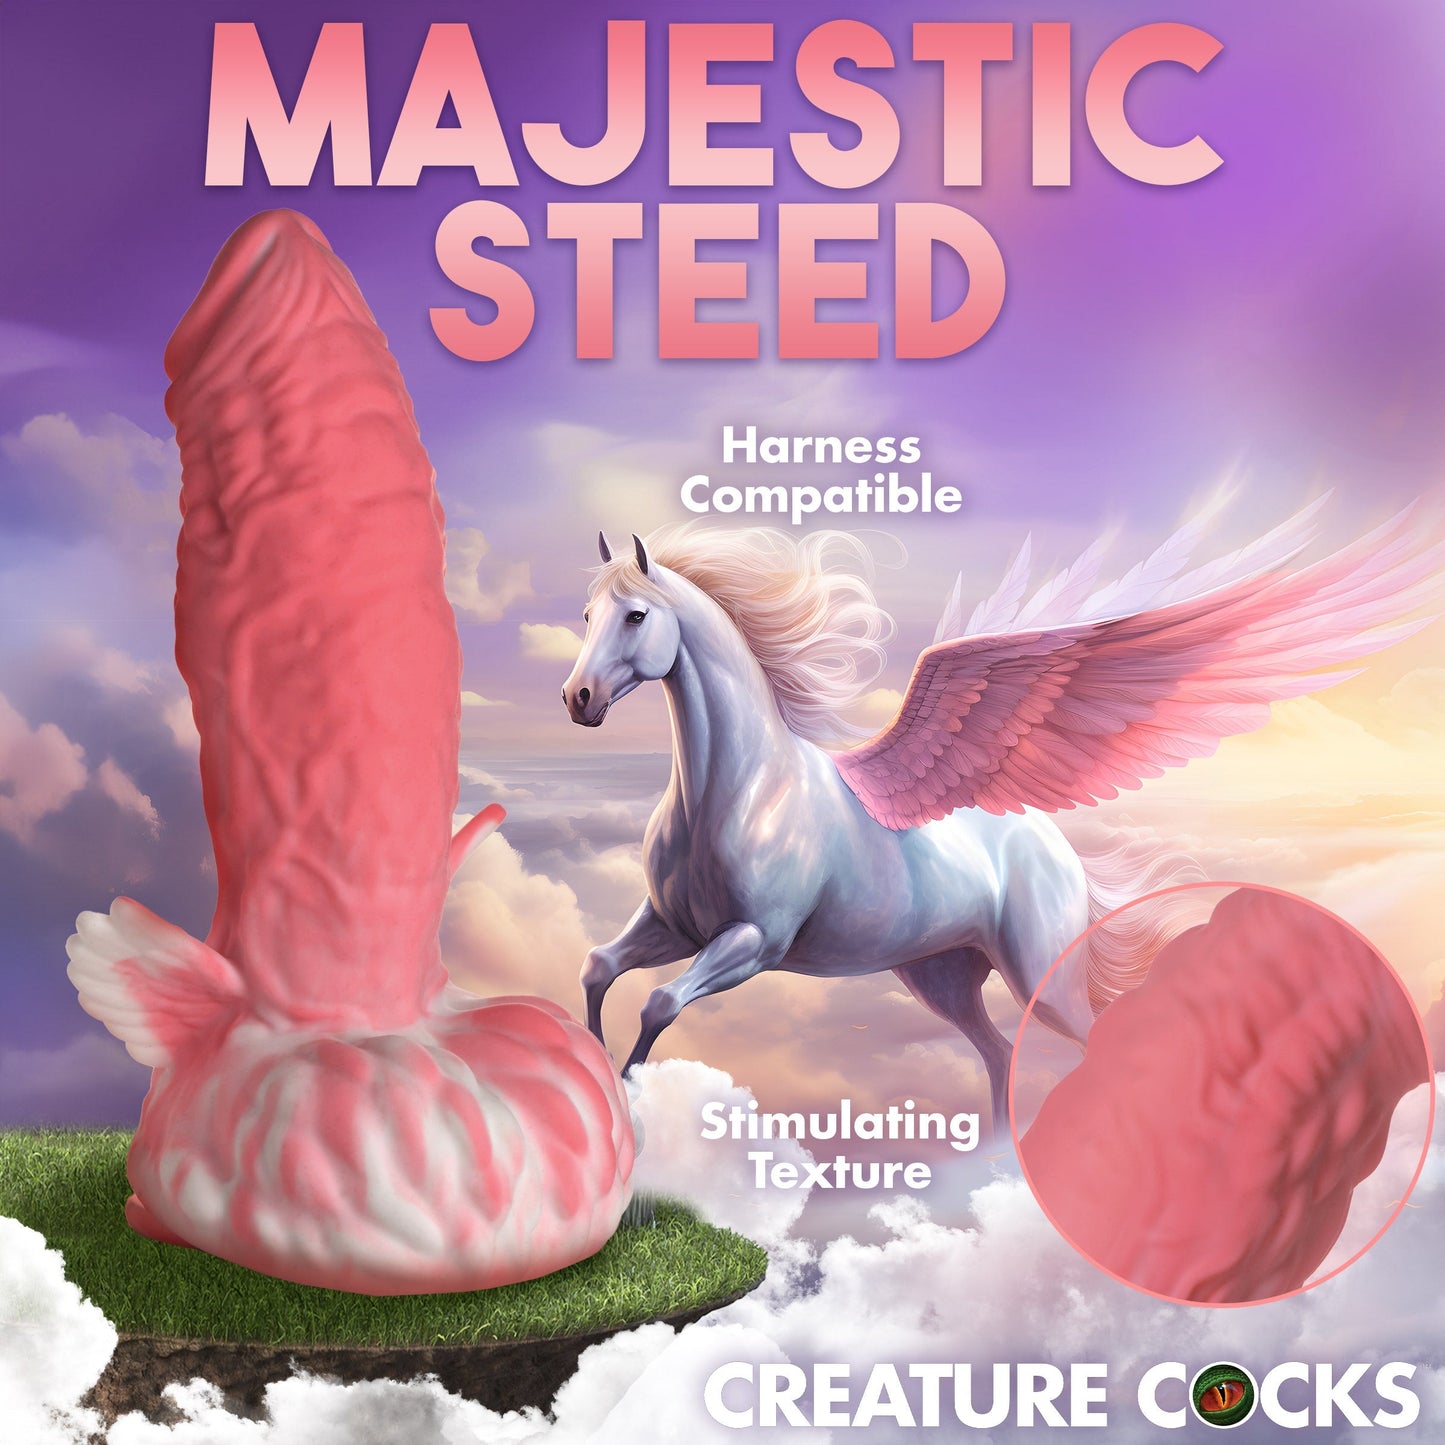 Pegasus Pecker Winged Silicone Creature Dildo